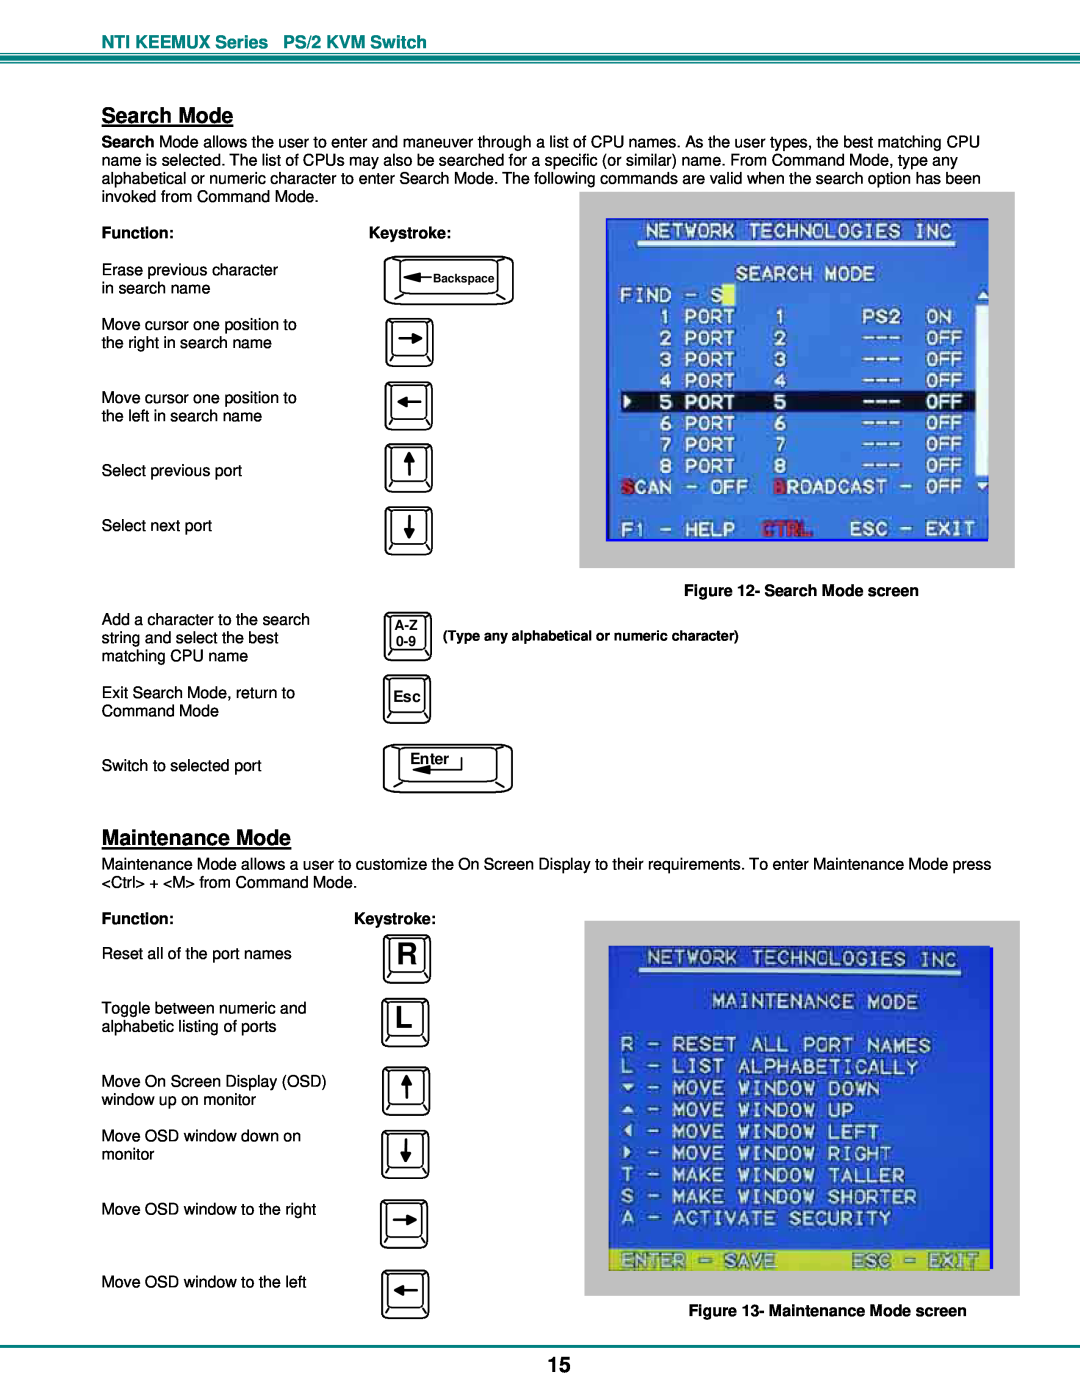 Network Technologies KEEMUX-Px operation manual Maintenance Mode, FunctionKeystroke, Search Mode screen, Esc Enter 